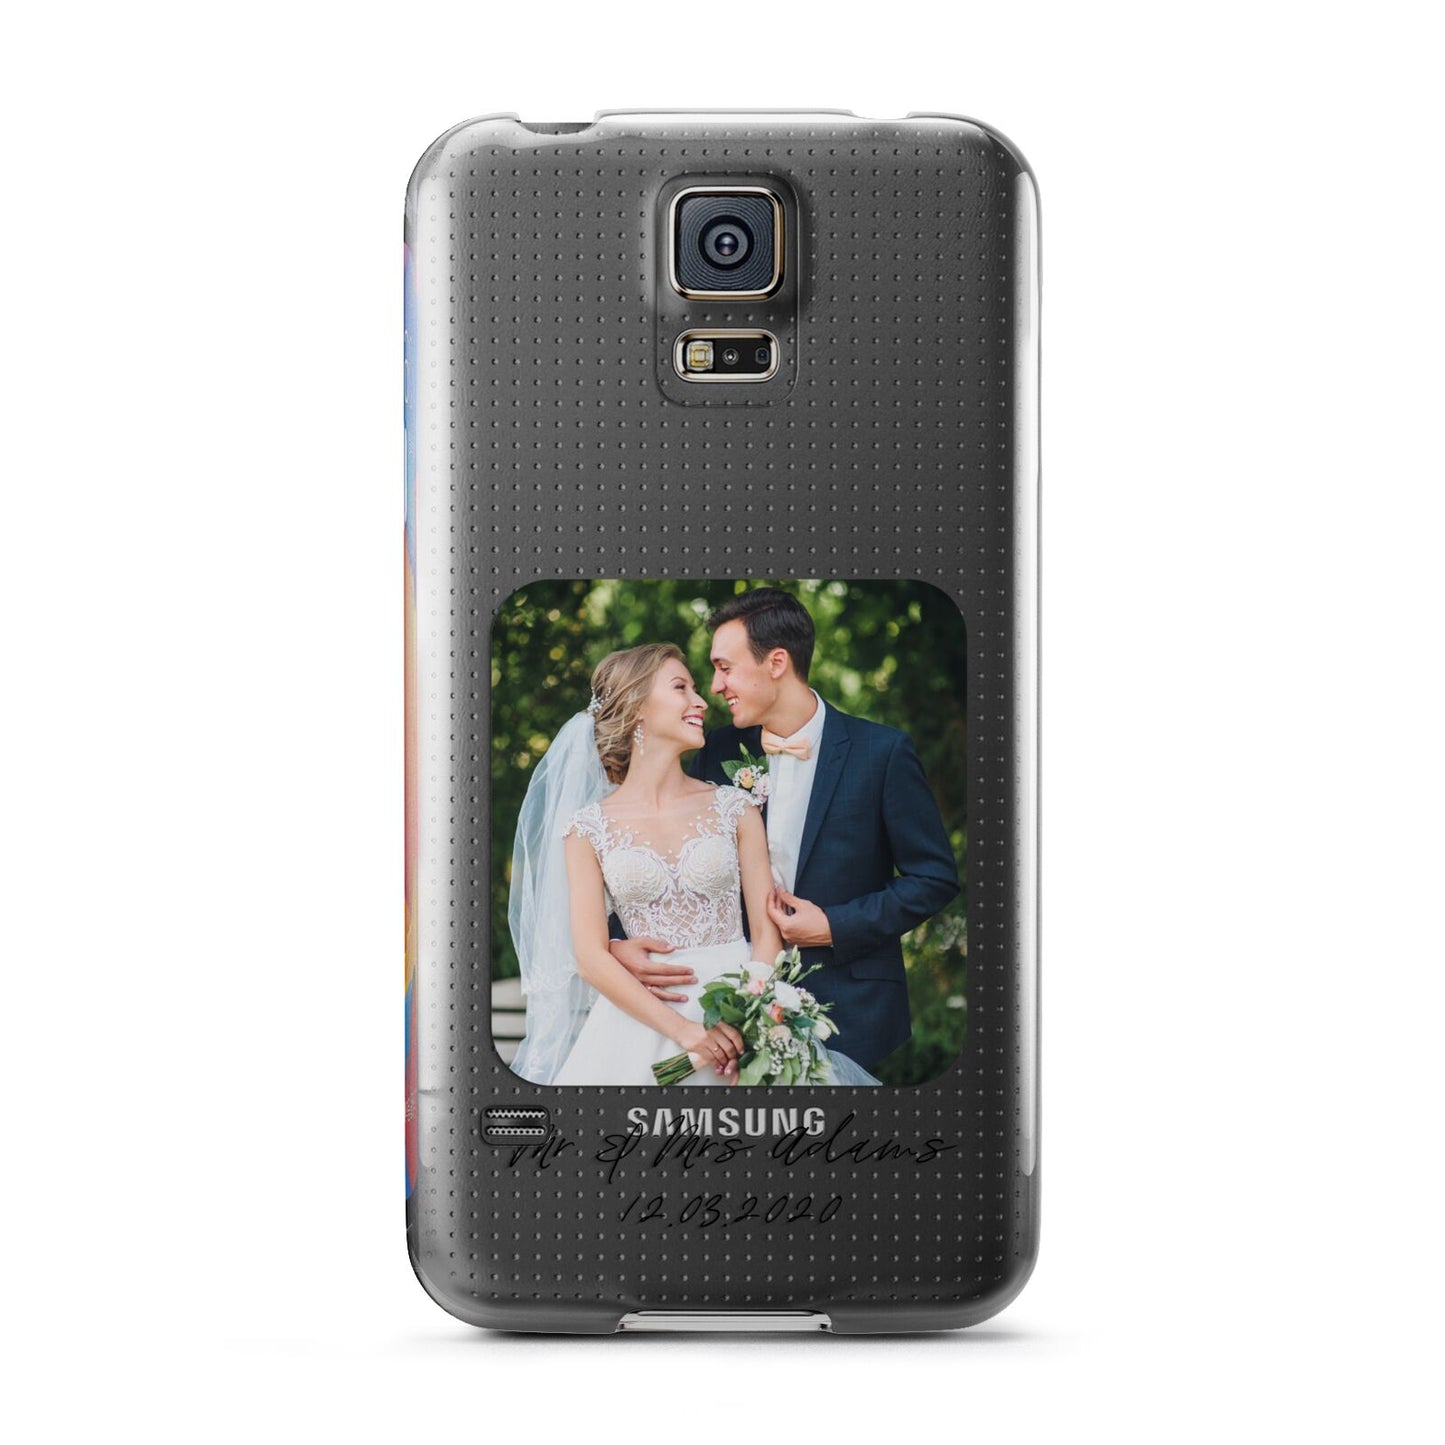 Wedding Photo Upload Keepsake with Text Samsung Galaxy S5 Case